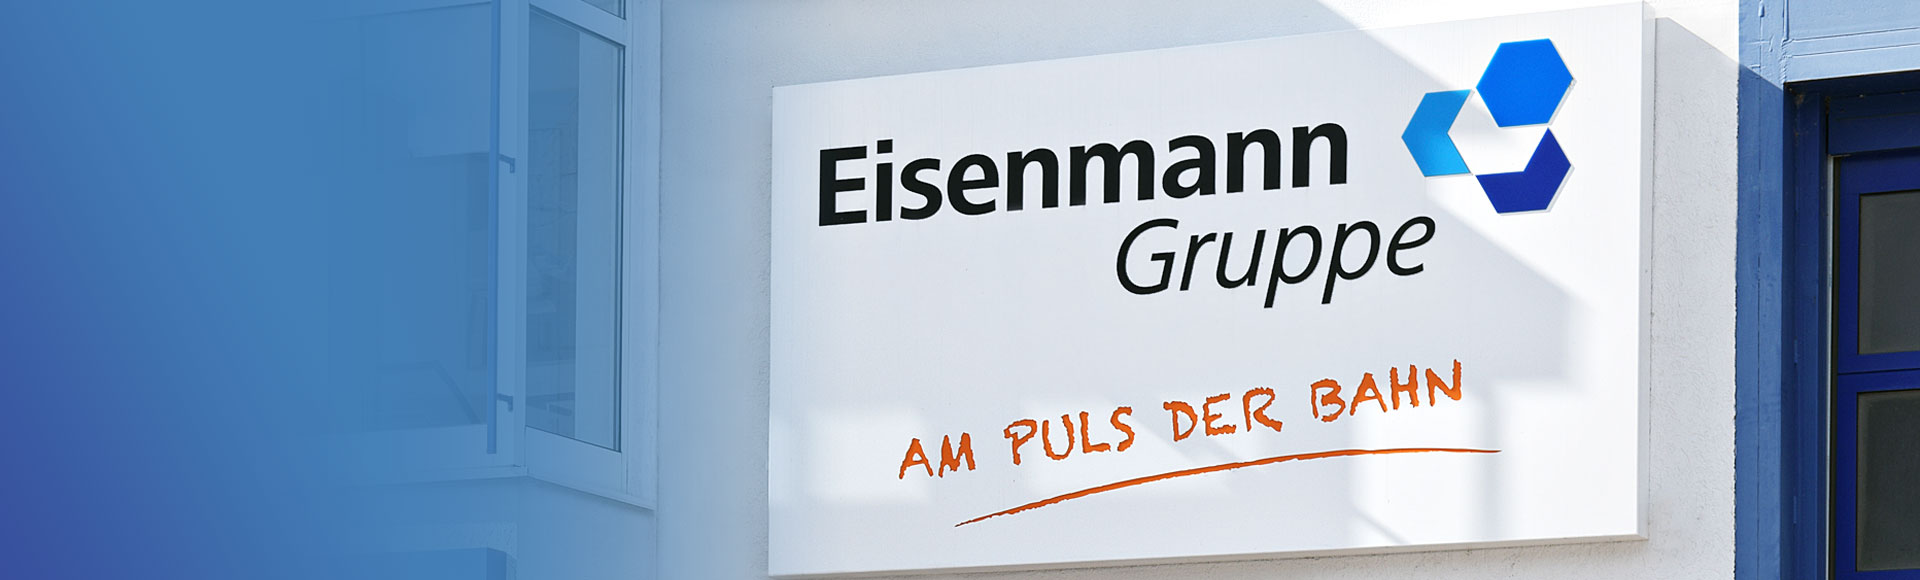 Eisenmann Gruppe